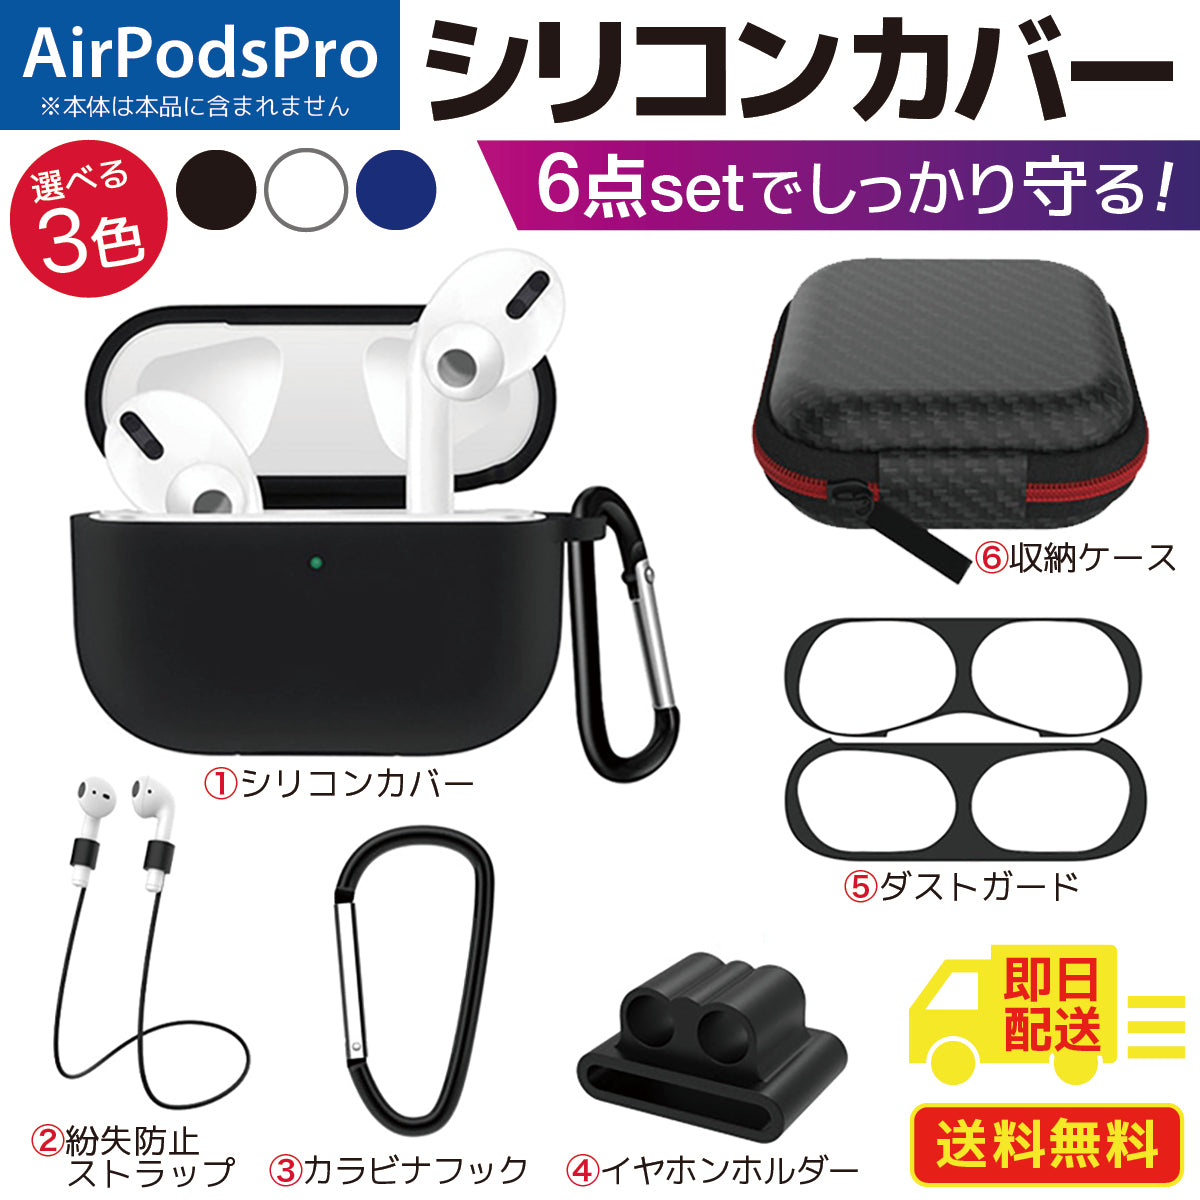 Apple AirPods Pro 黒色のゴムケース付き